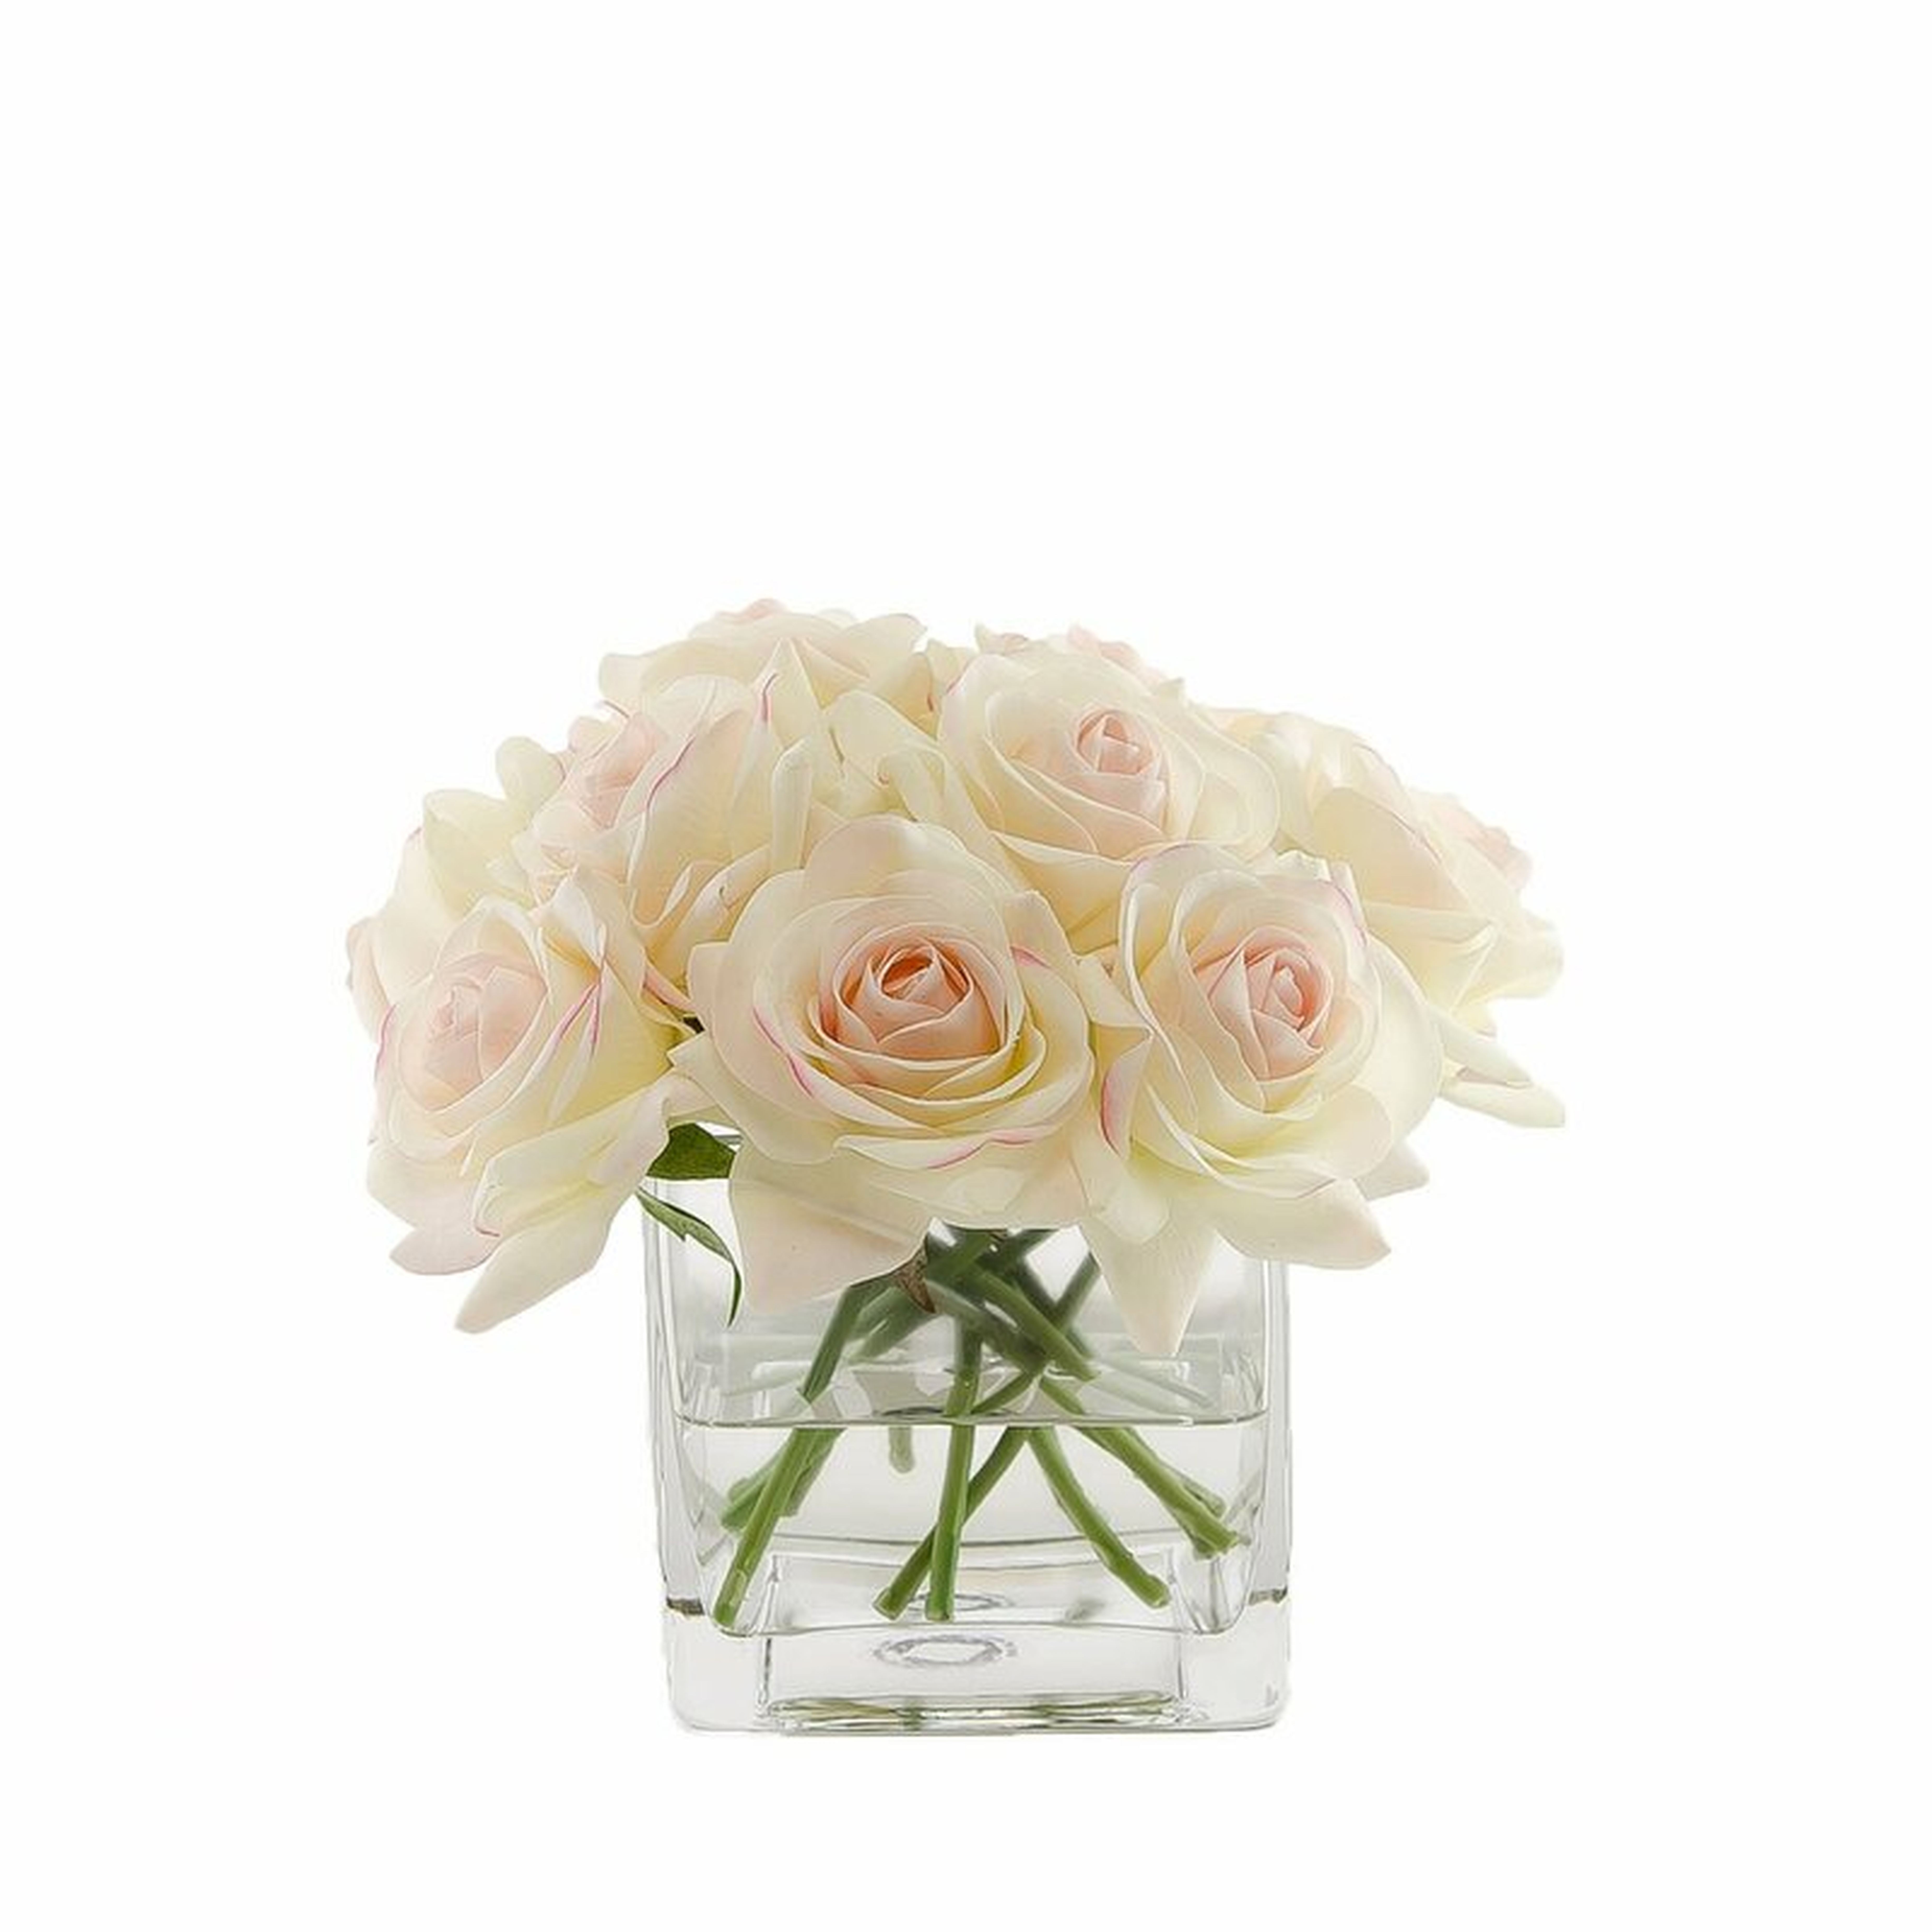 Roses Floral Arrangements and Centerpieces in Vase - Wayfair